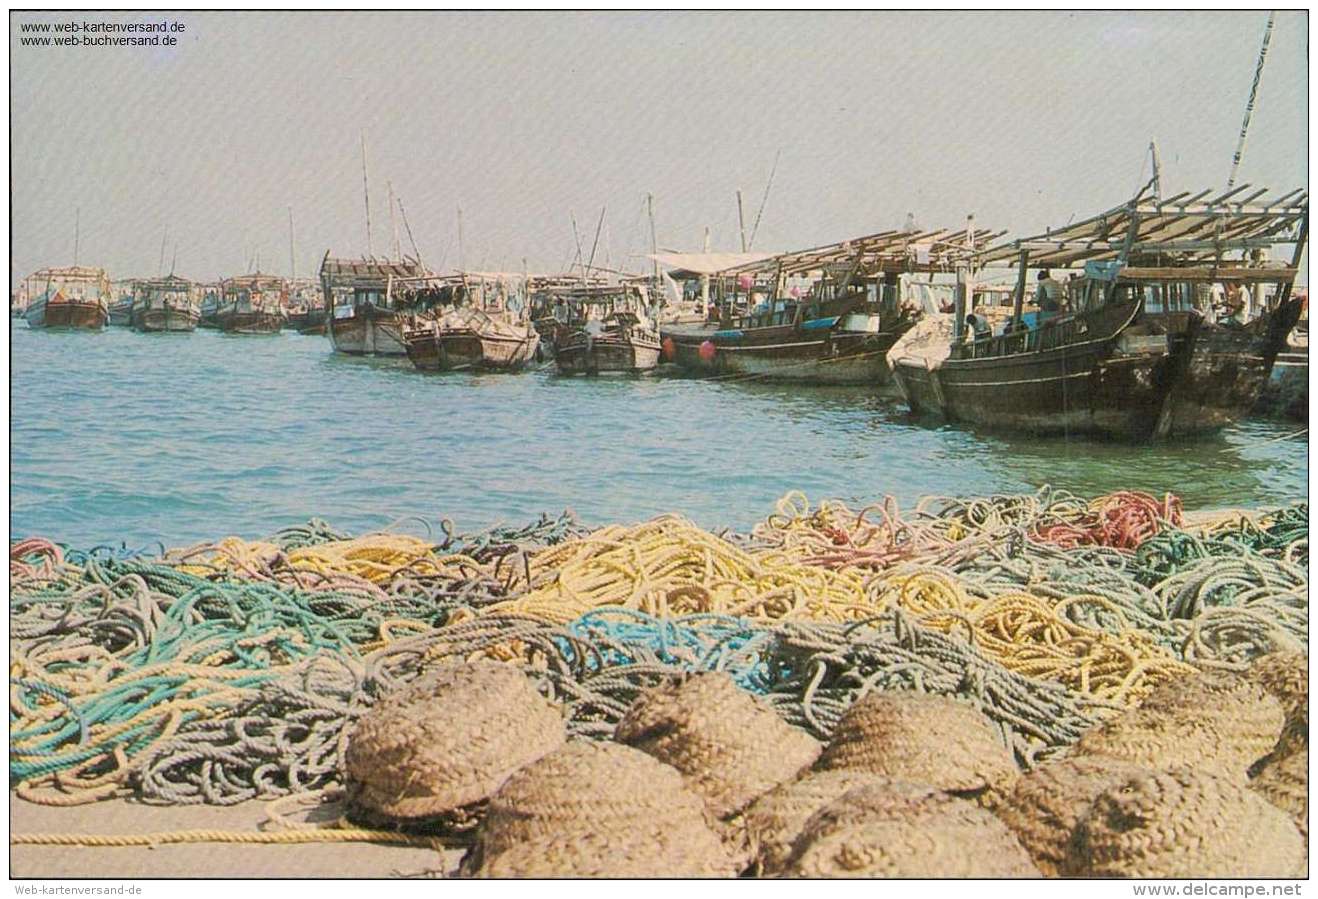 Fishing Boats - Bahrain